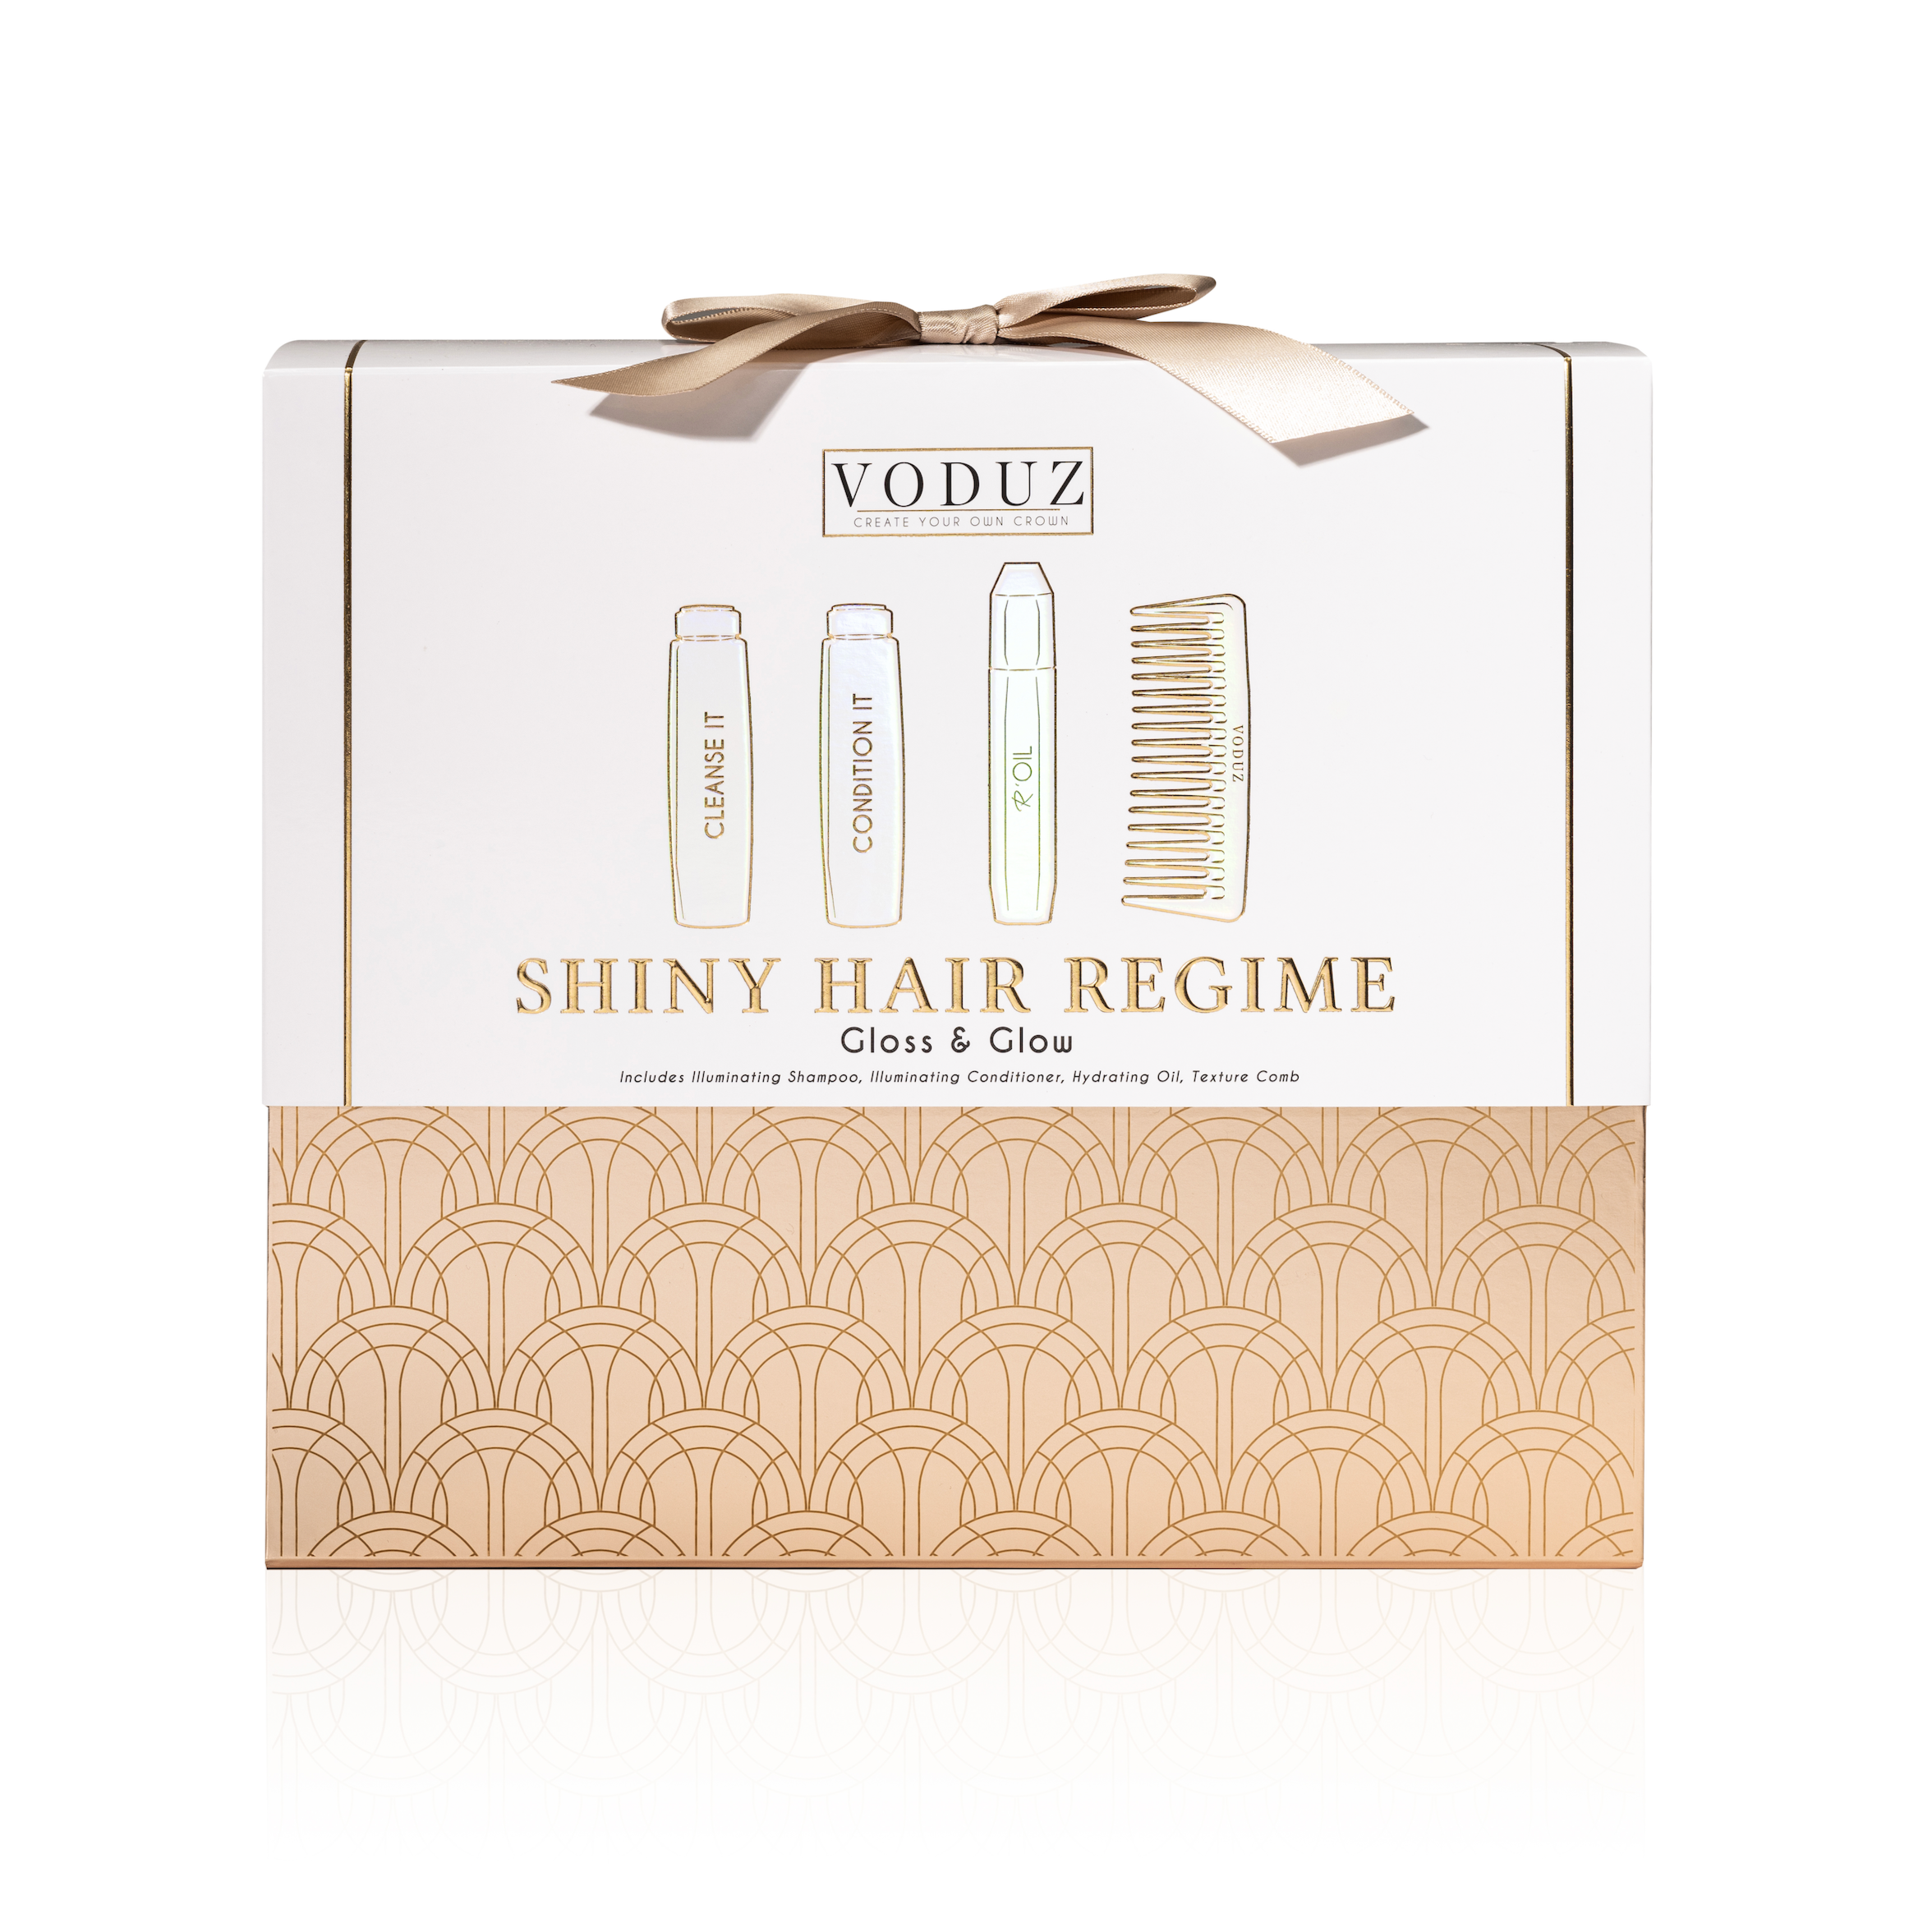 Voduz Gloss & Glow - Shiny Hair Regime, gold packaging